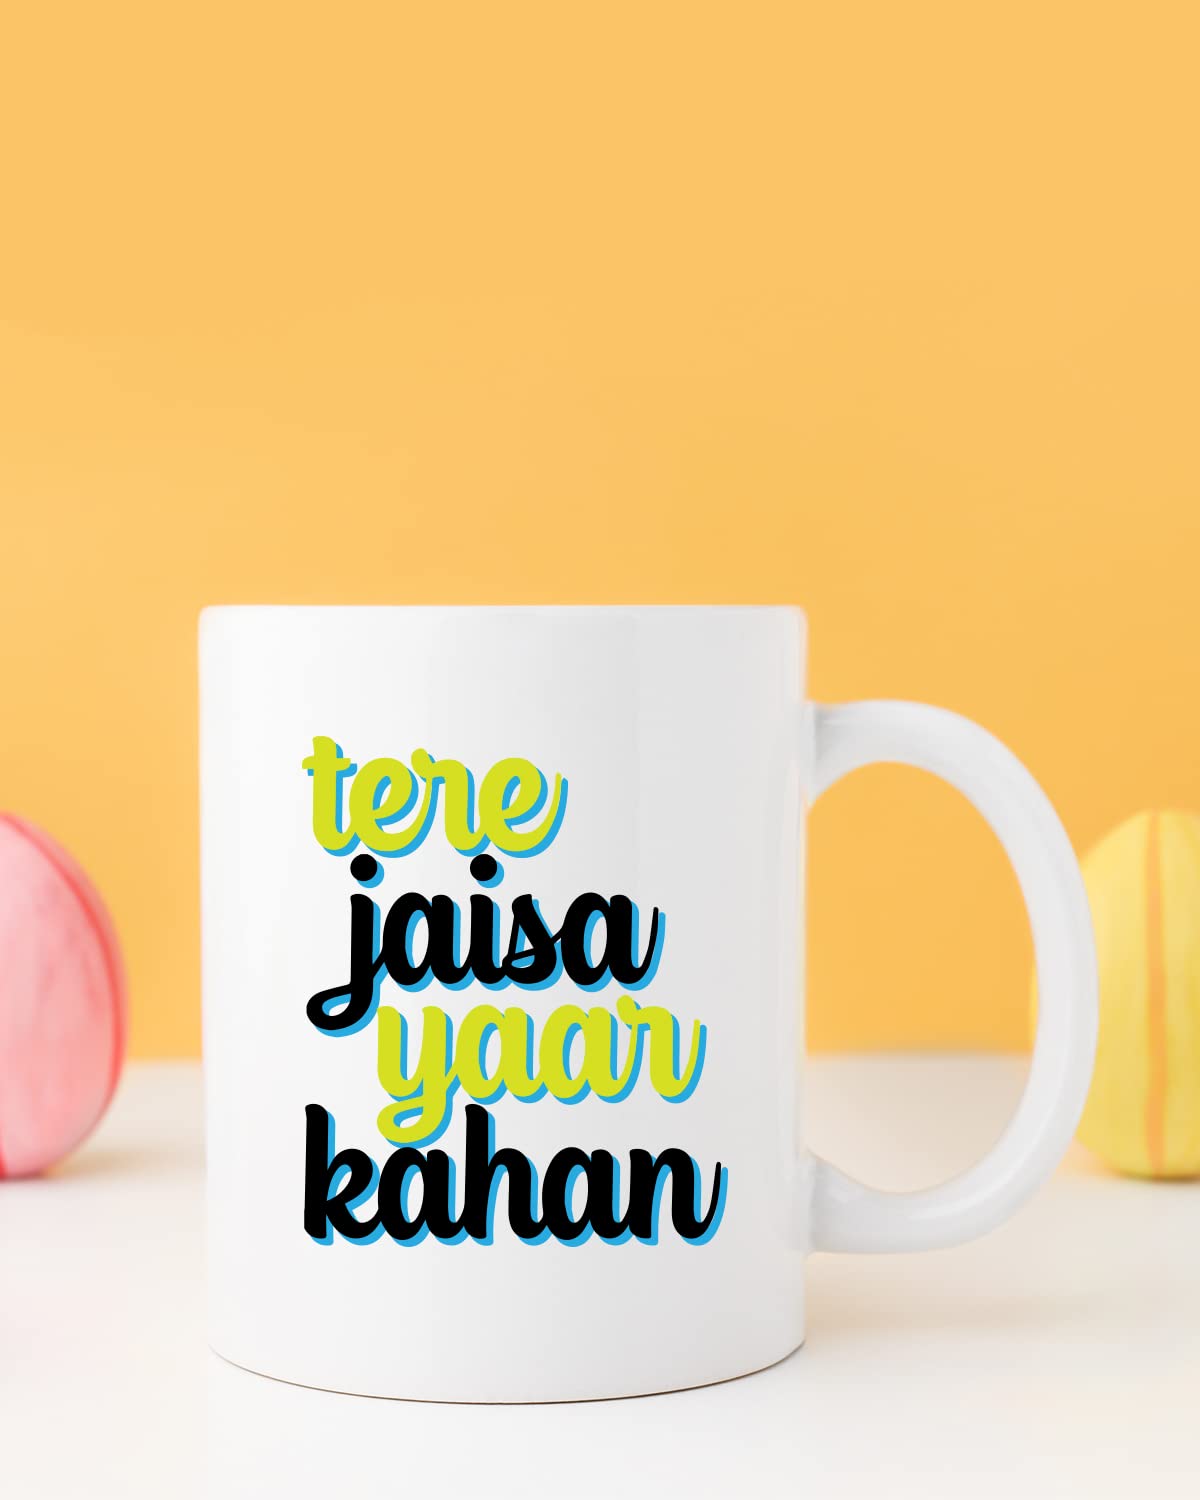 TERE JAISA YAAR Kahan Coffee Mug - Gift for Friend, Birthday Gift, Birthday Mug, Motivational Quotes Mug, Mugs with Funny & Funky Dialogues, Bollywood Mugs, Funny Mugs for Him & Her